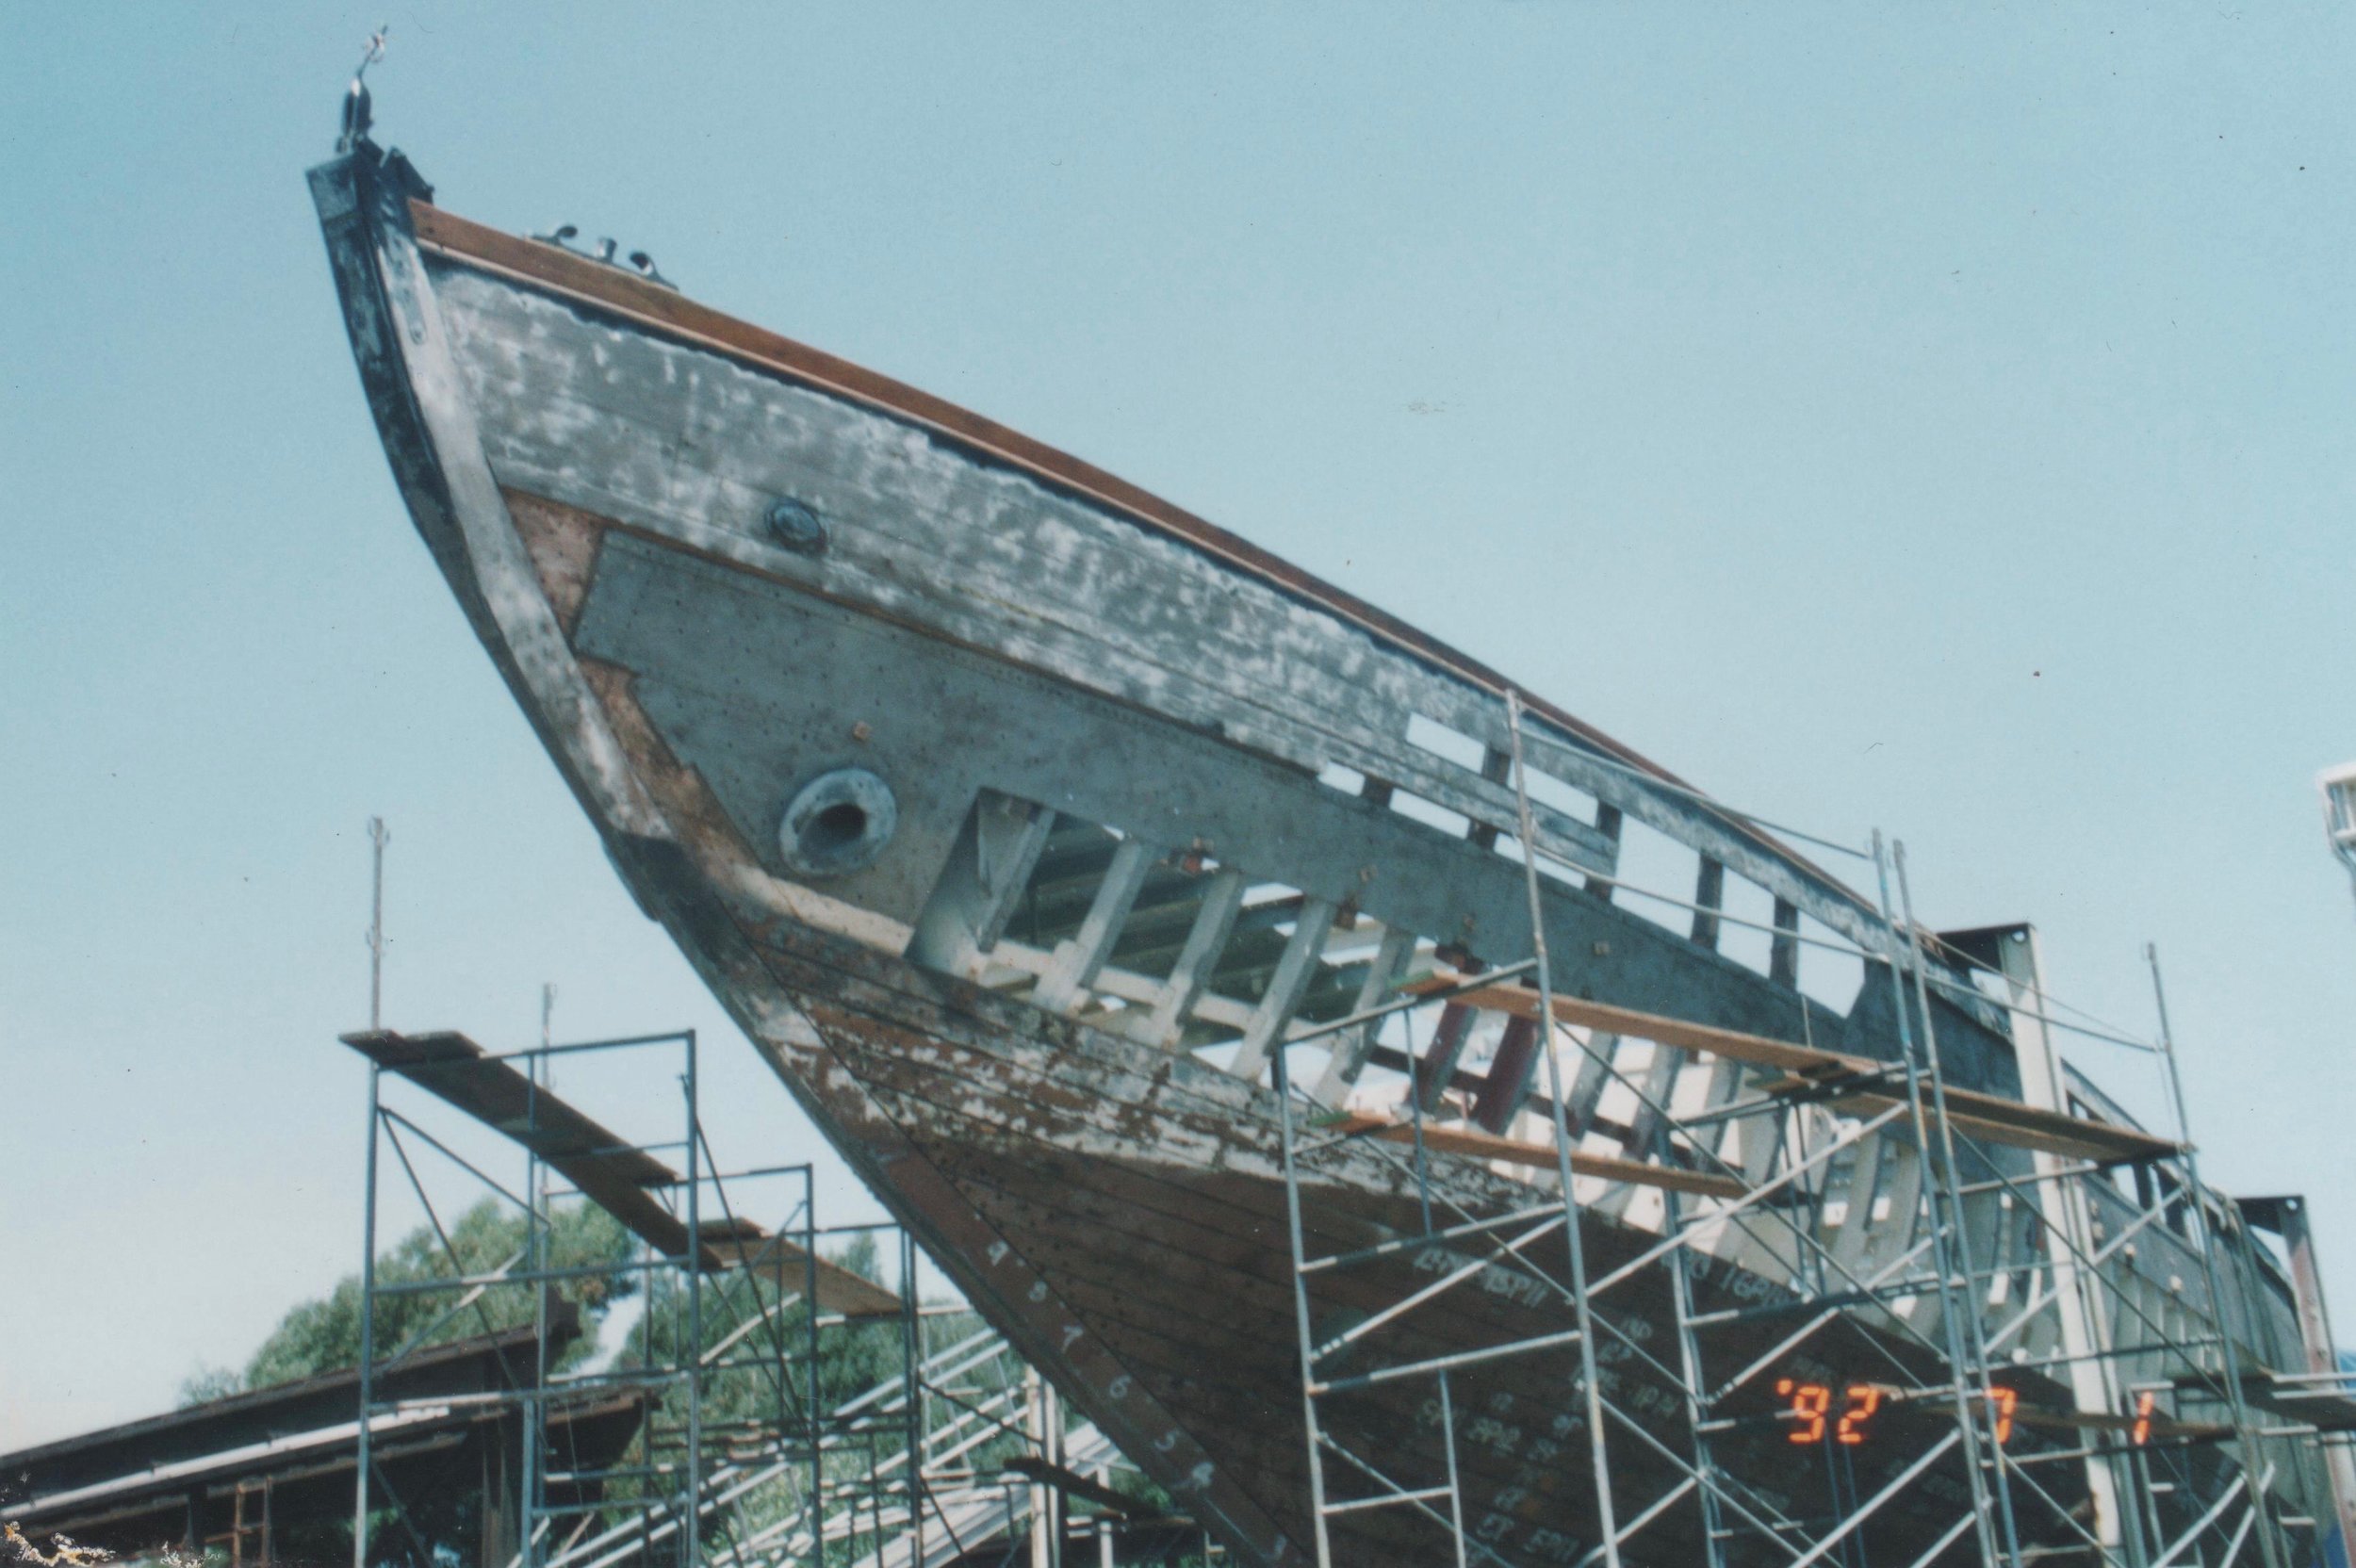 restoration of sailing yacht Eros